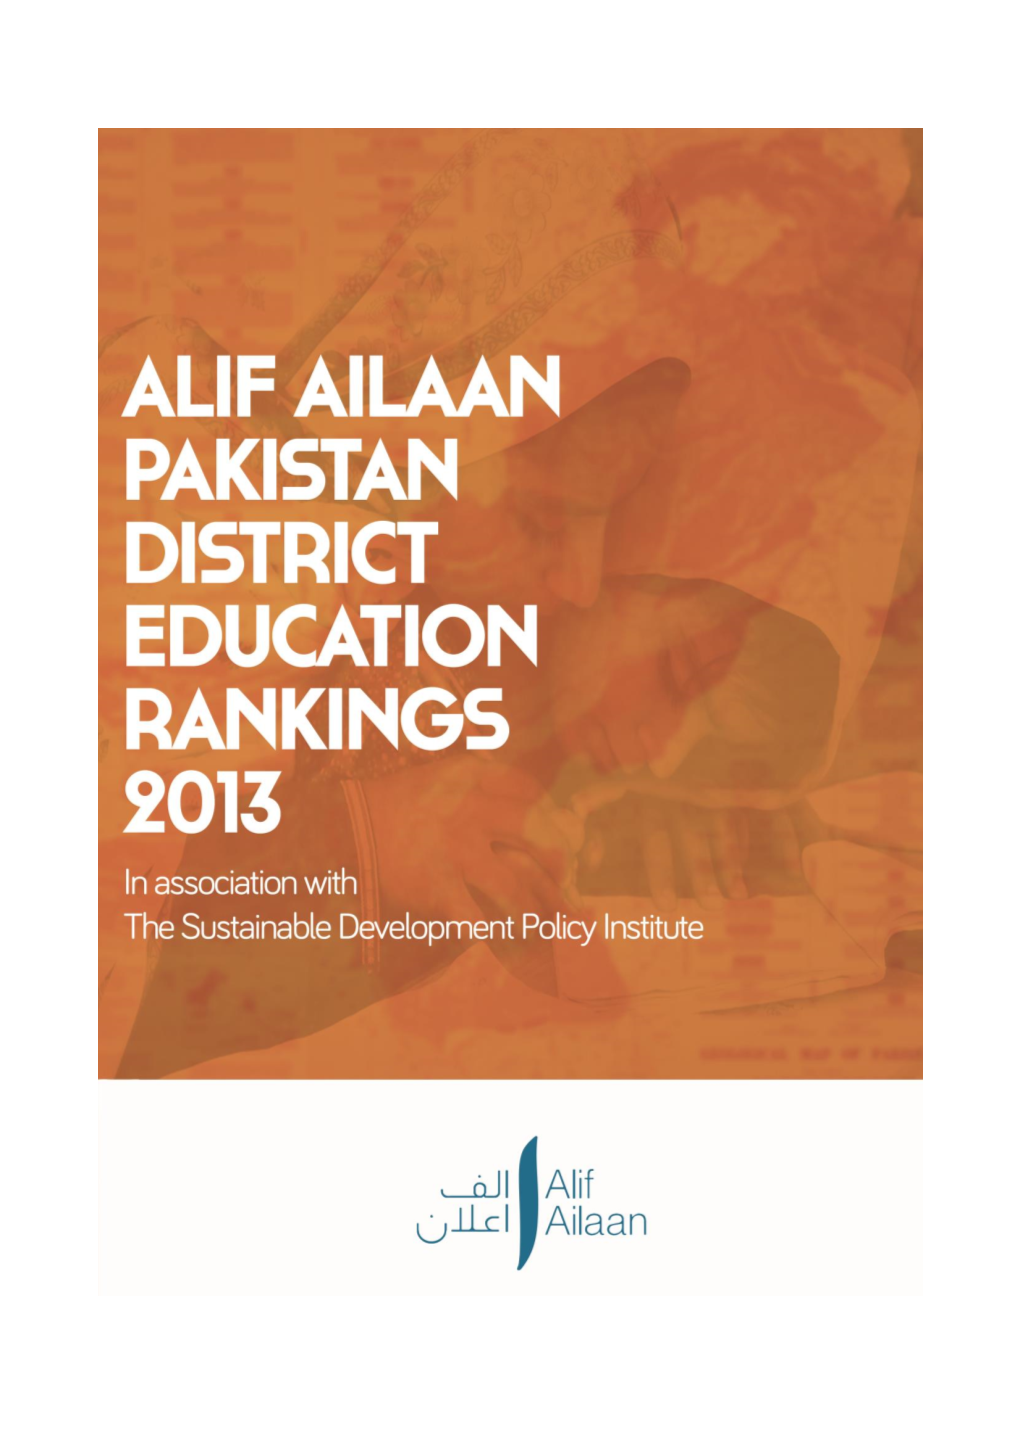 Alif Ailaan Pakistan District Education Rankings 2013